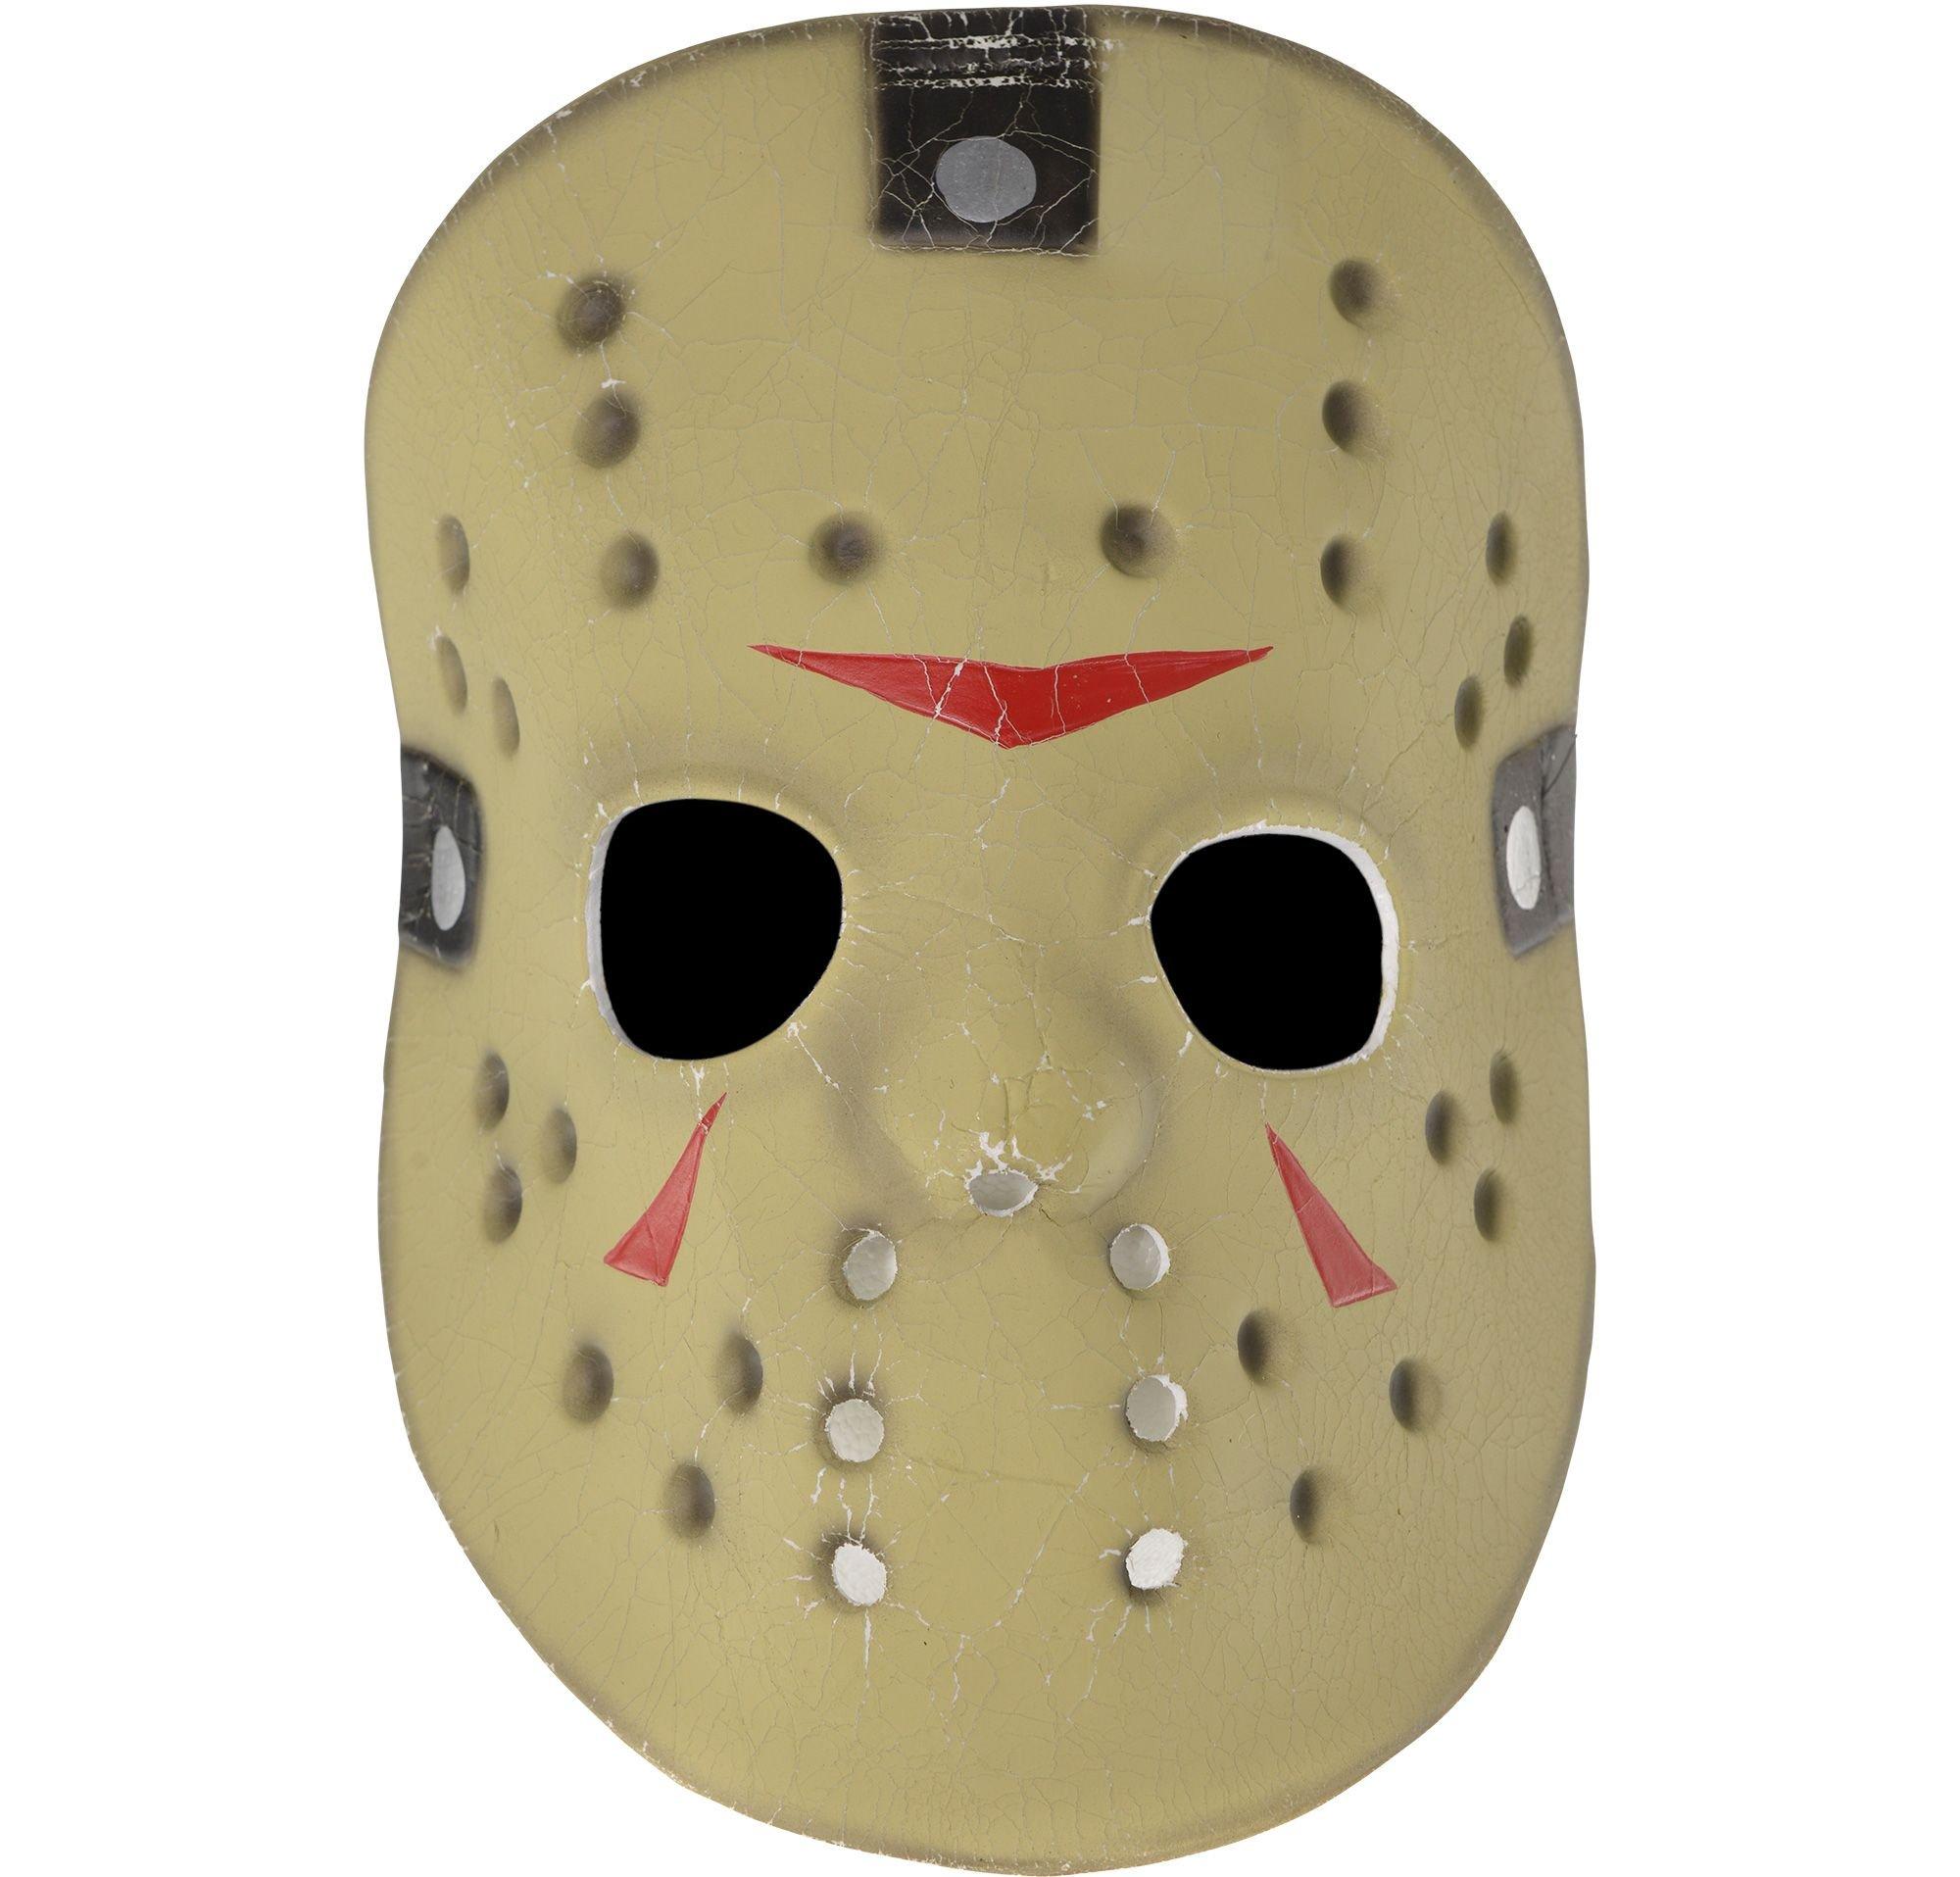 Jason Mask - Friday the 13th